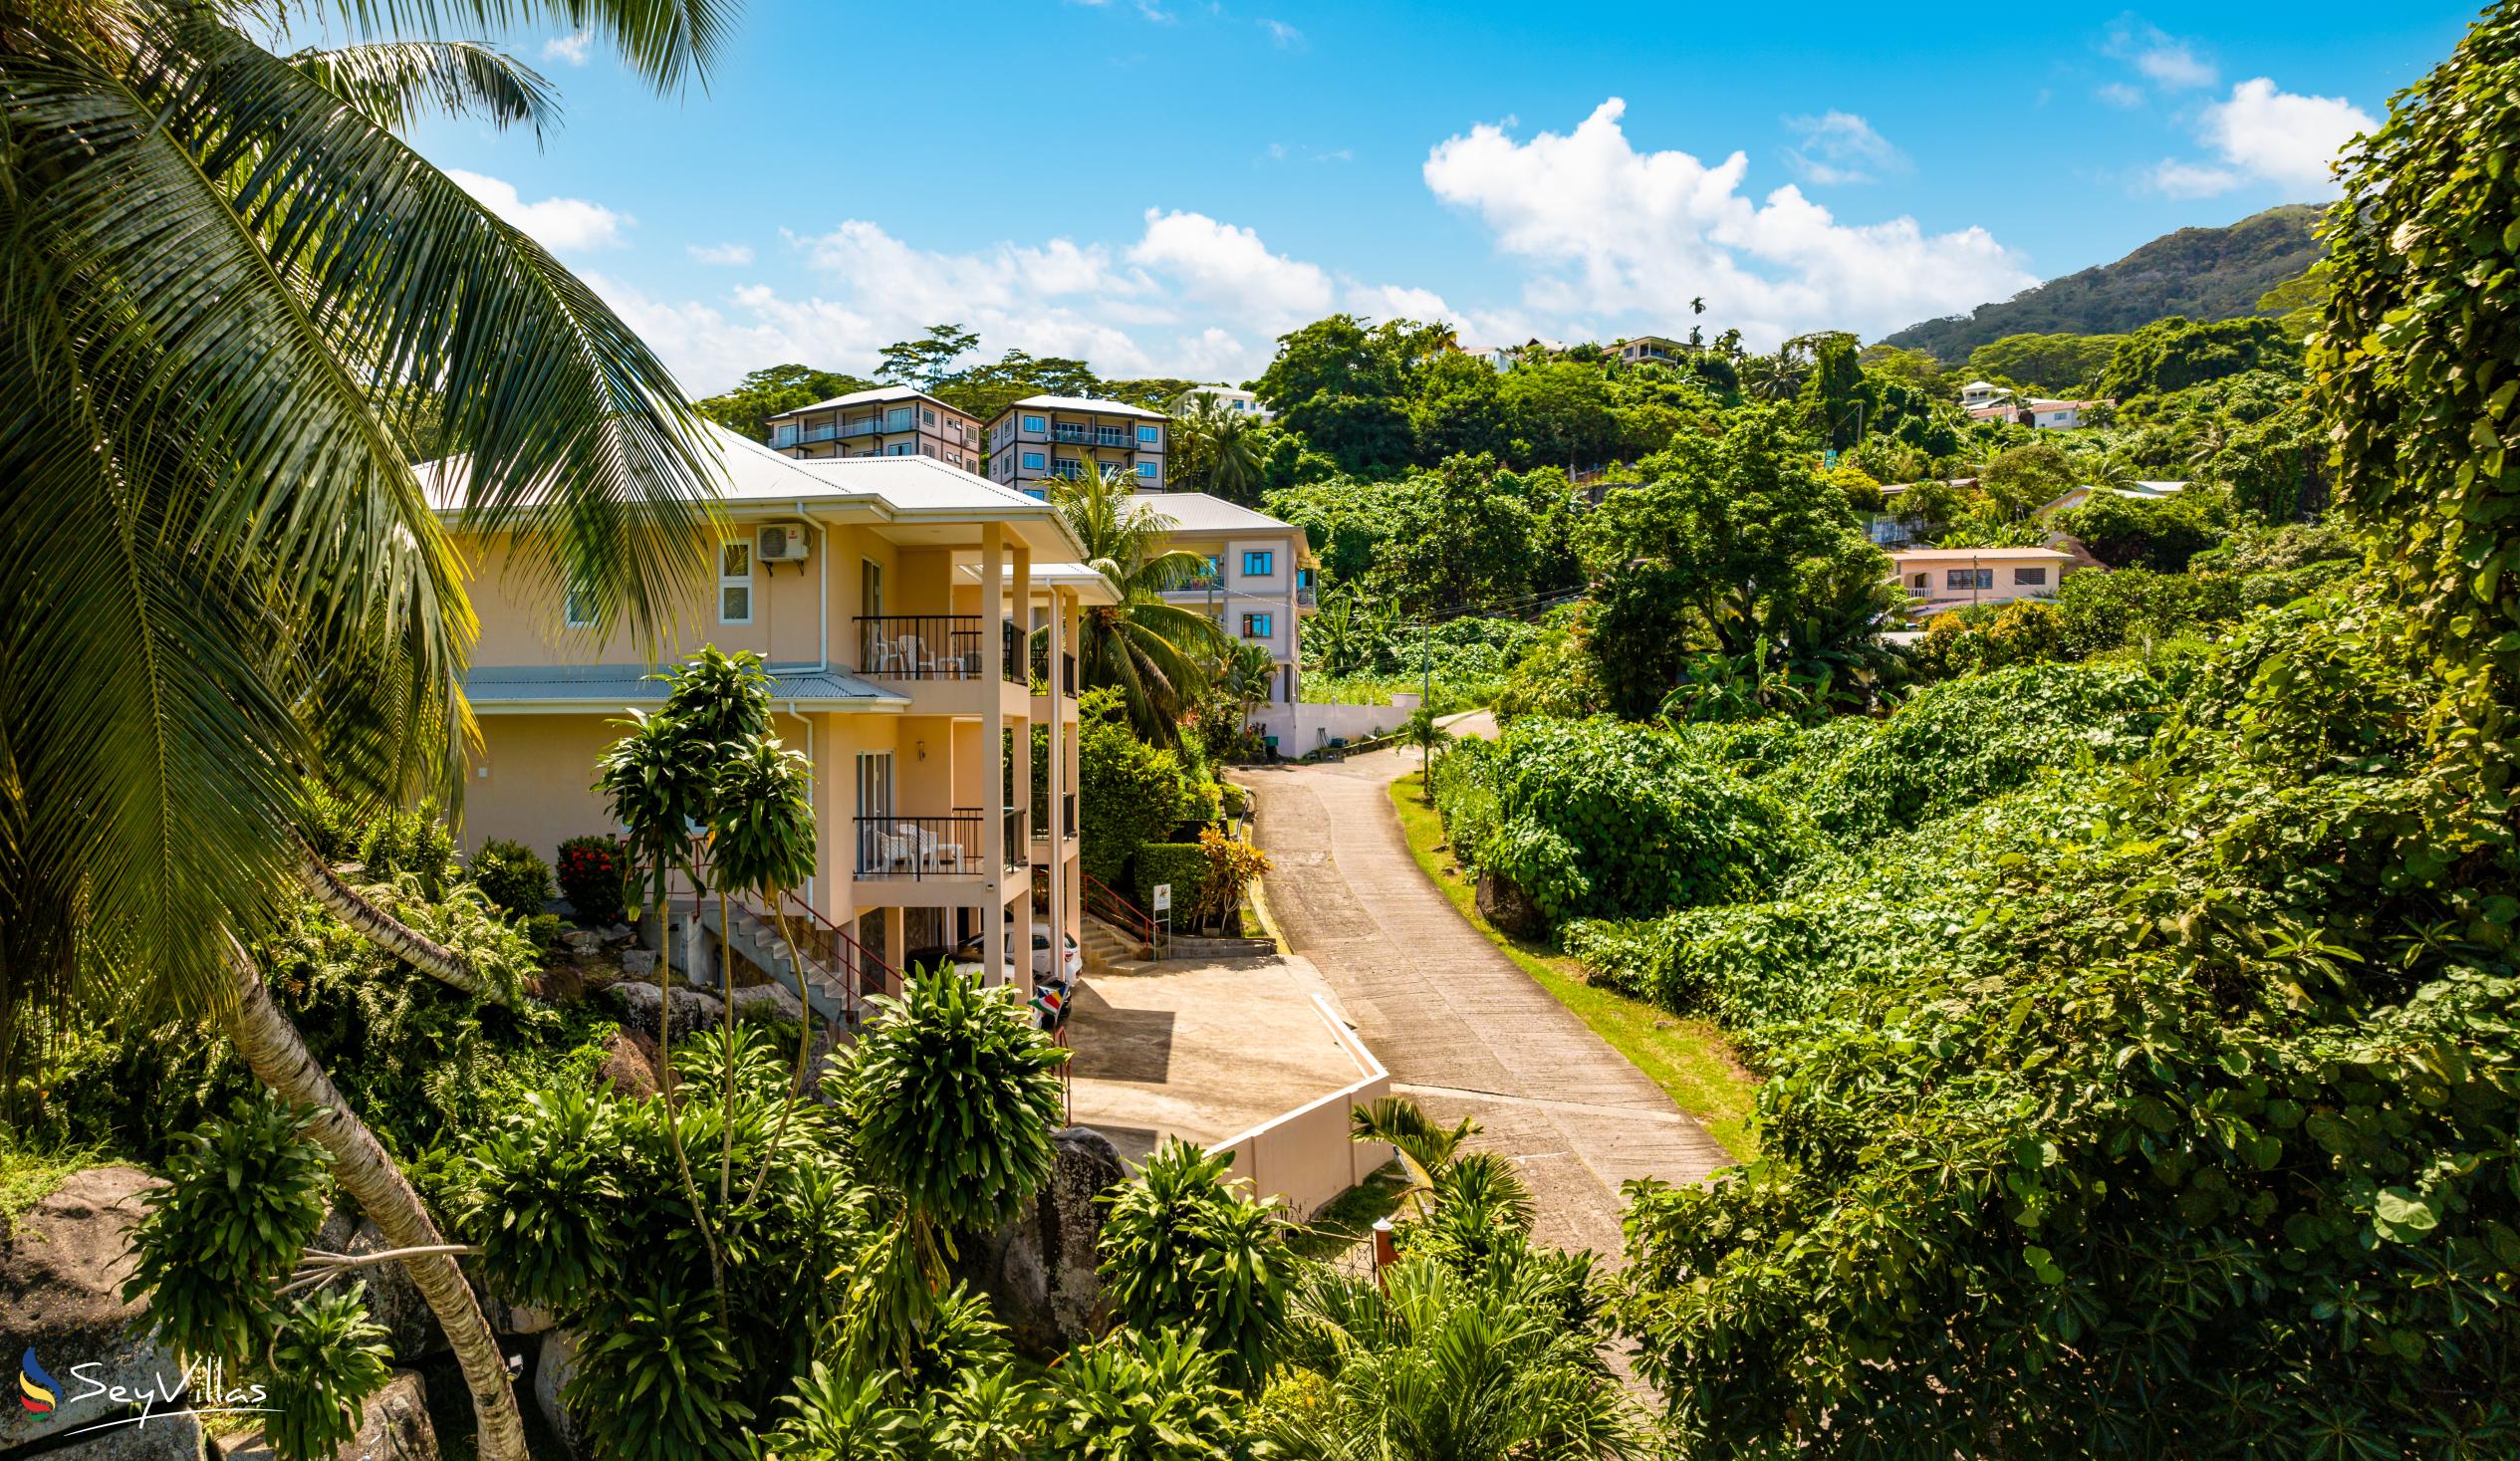 Foto 11: JAIDSS Holiday Apartments - Aussenbereich - Mahé (Seychellen)